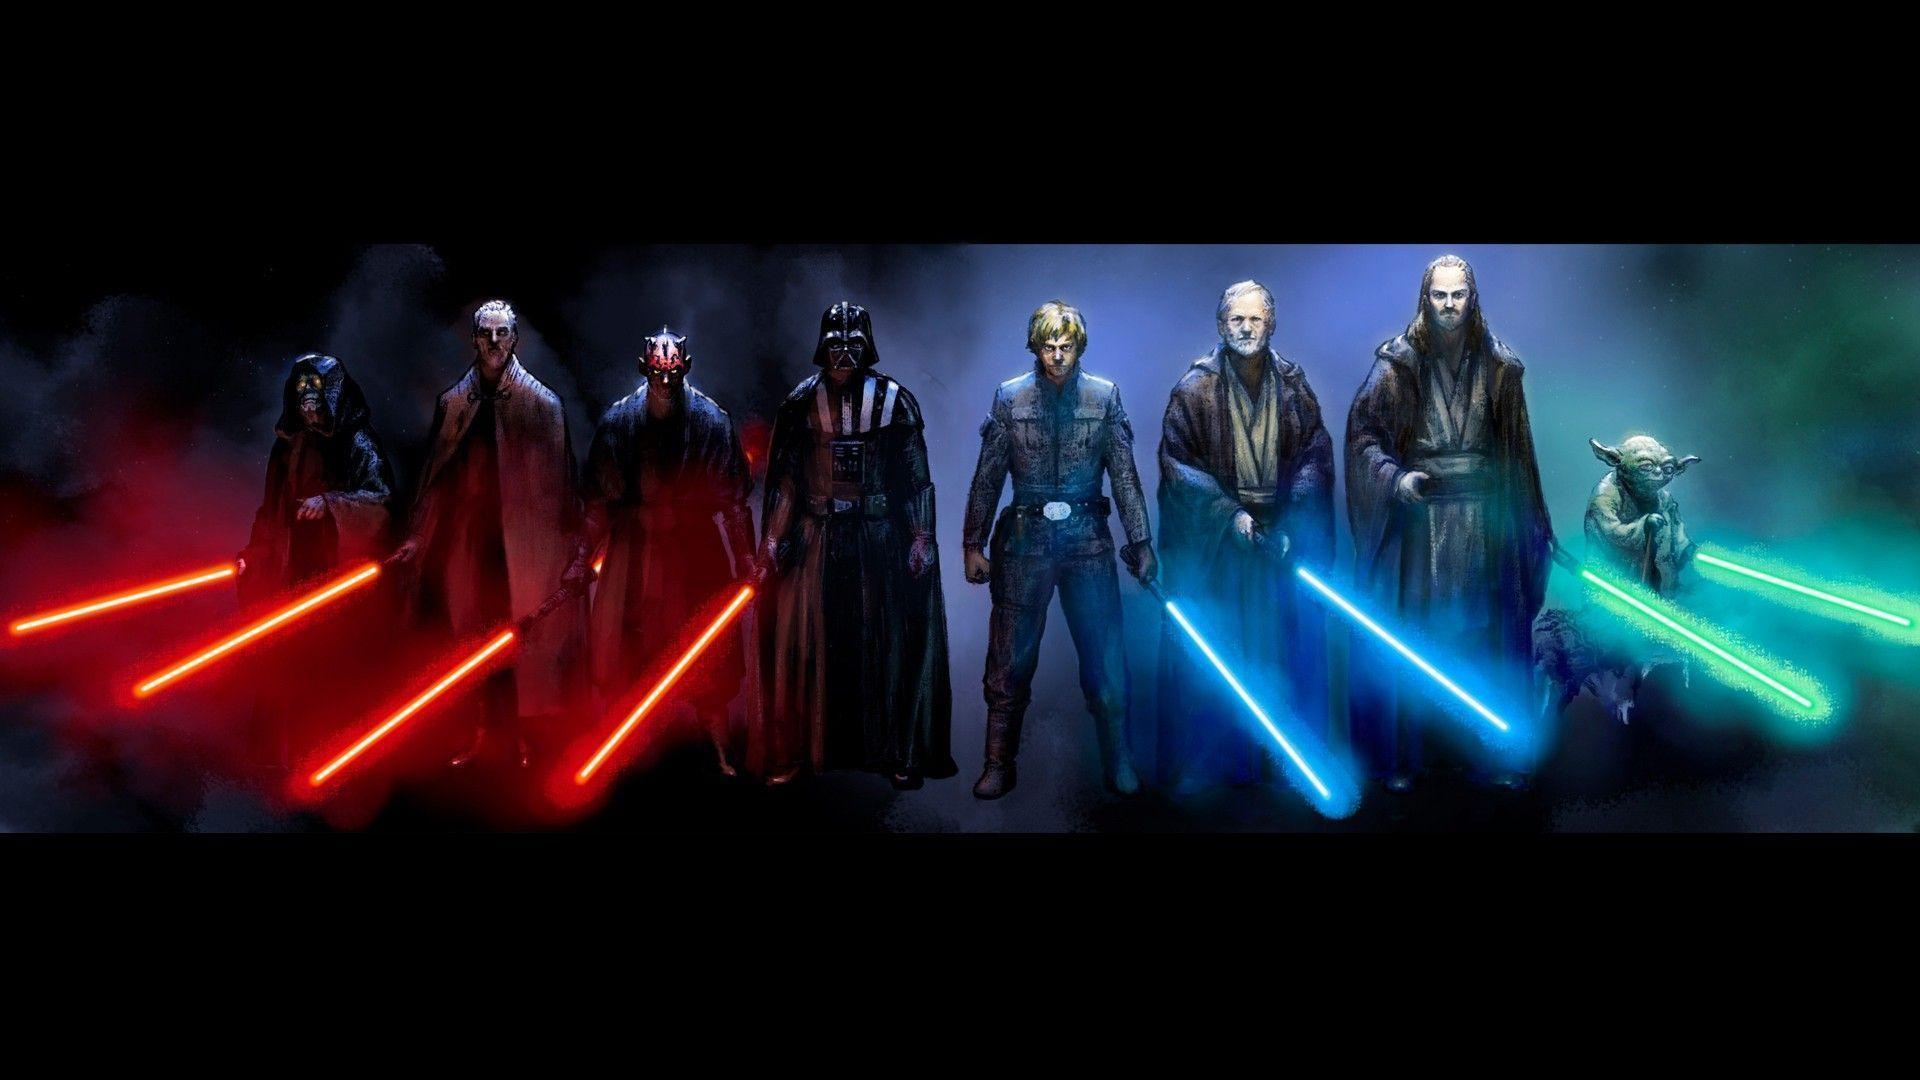 Star Wars Sith wallpaper